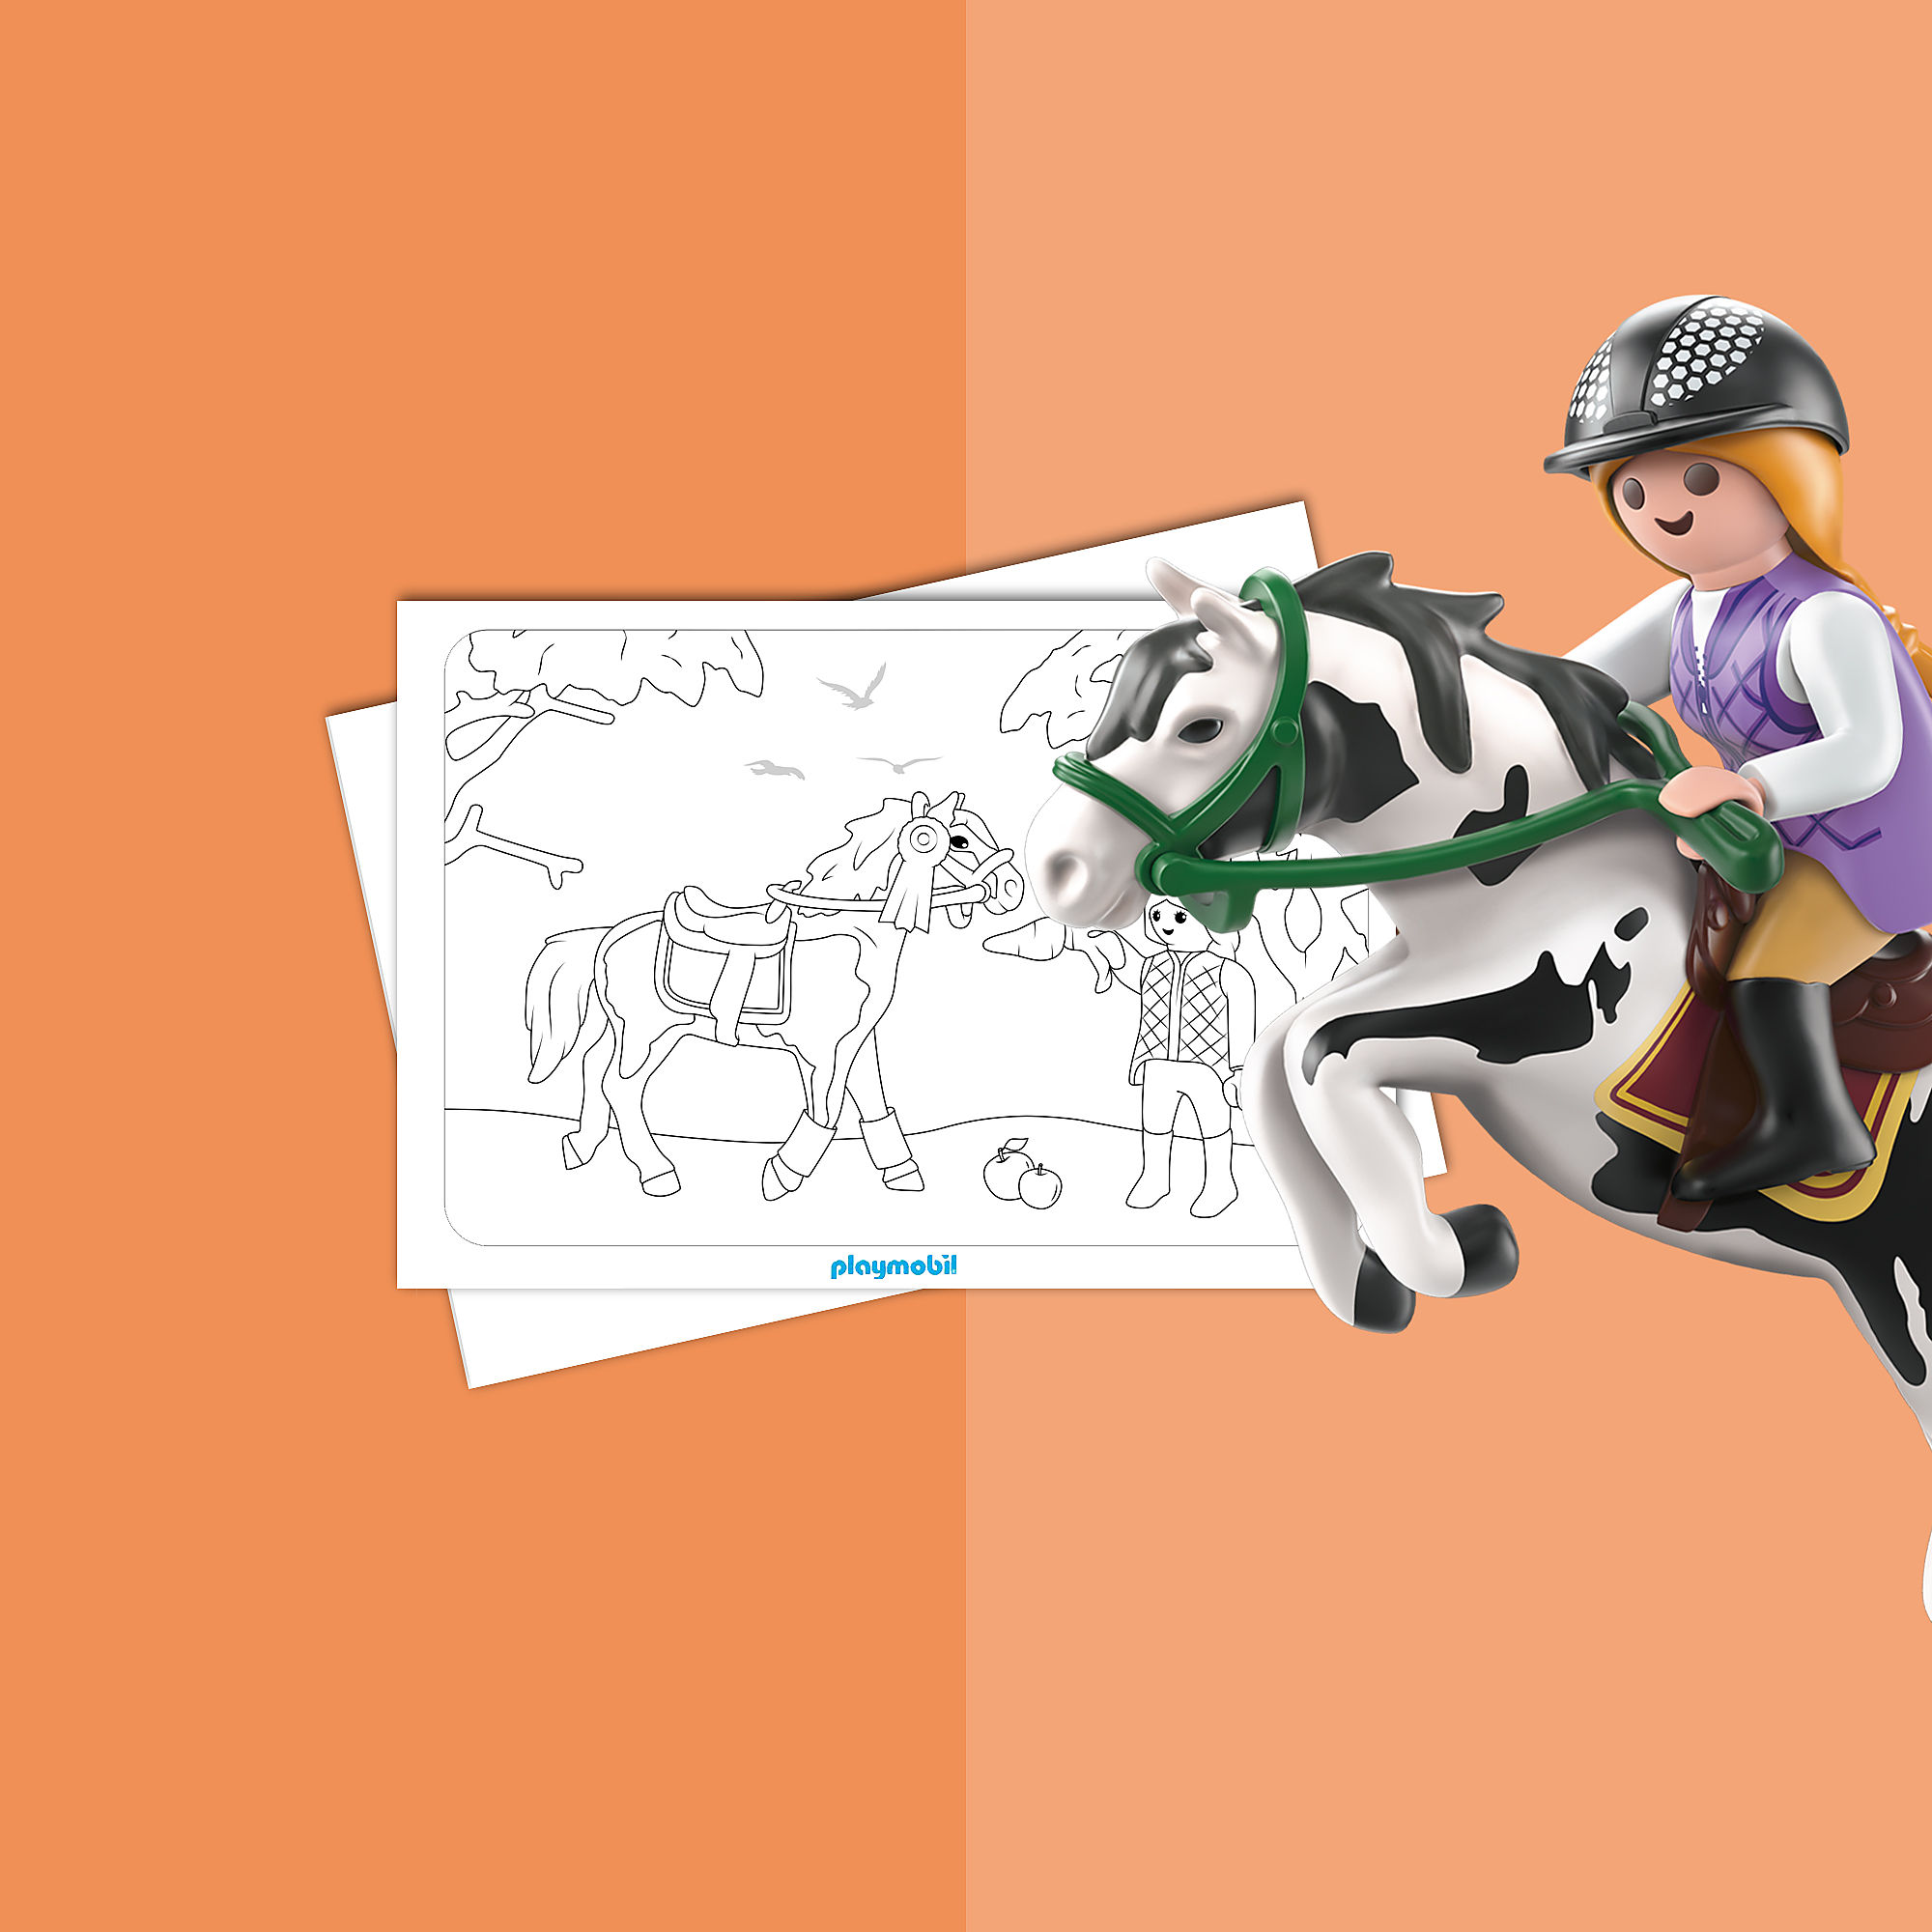 Playmobil Country - Le Club d'équitation - Achat / Vente Playmobil